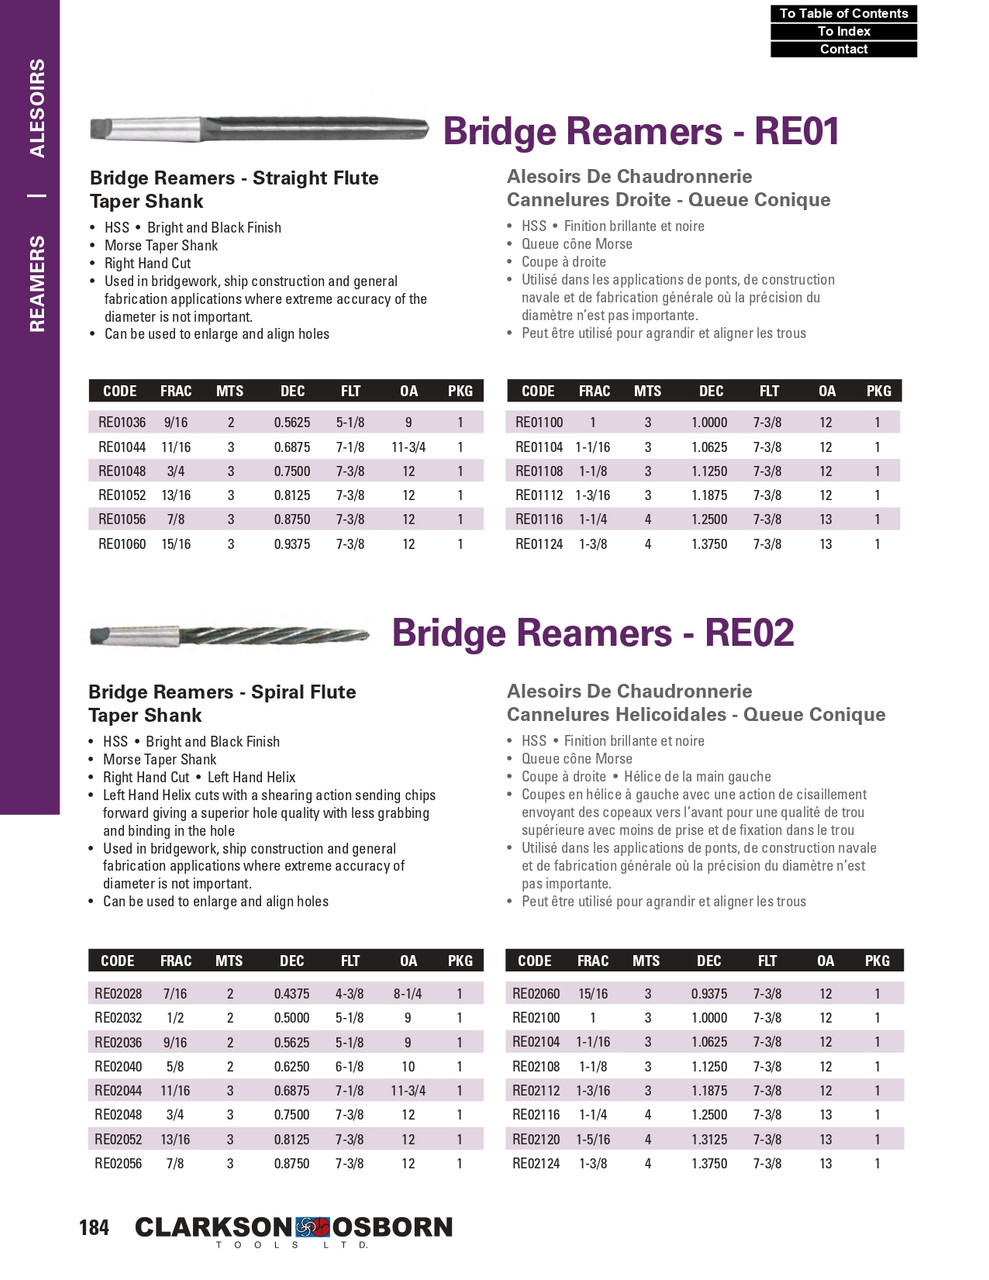 9/16" x #2 HSS Morse Taper Bridge Reamer   RE01036